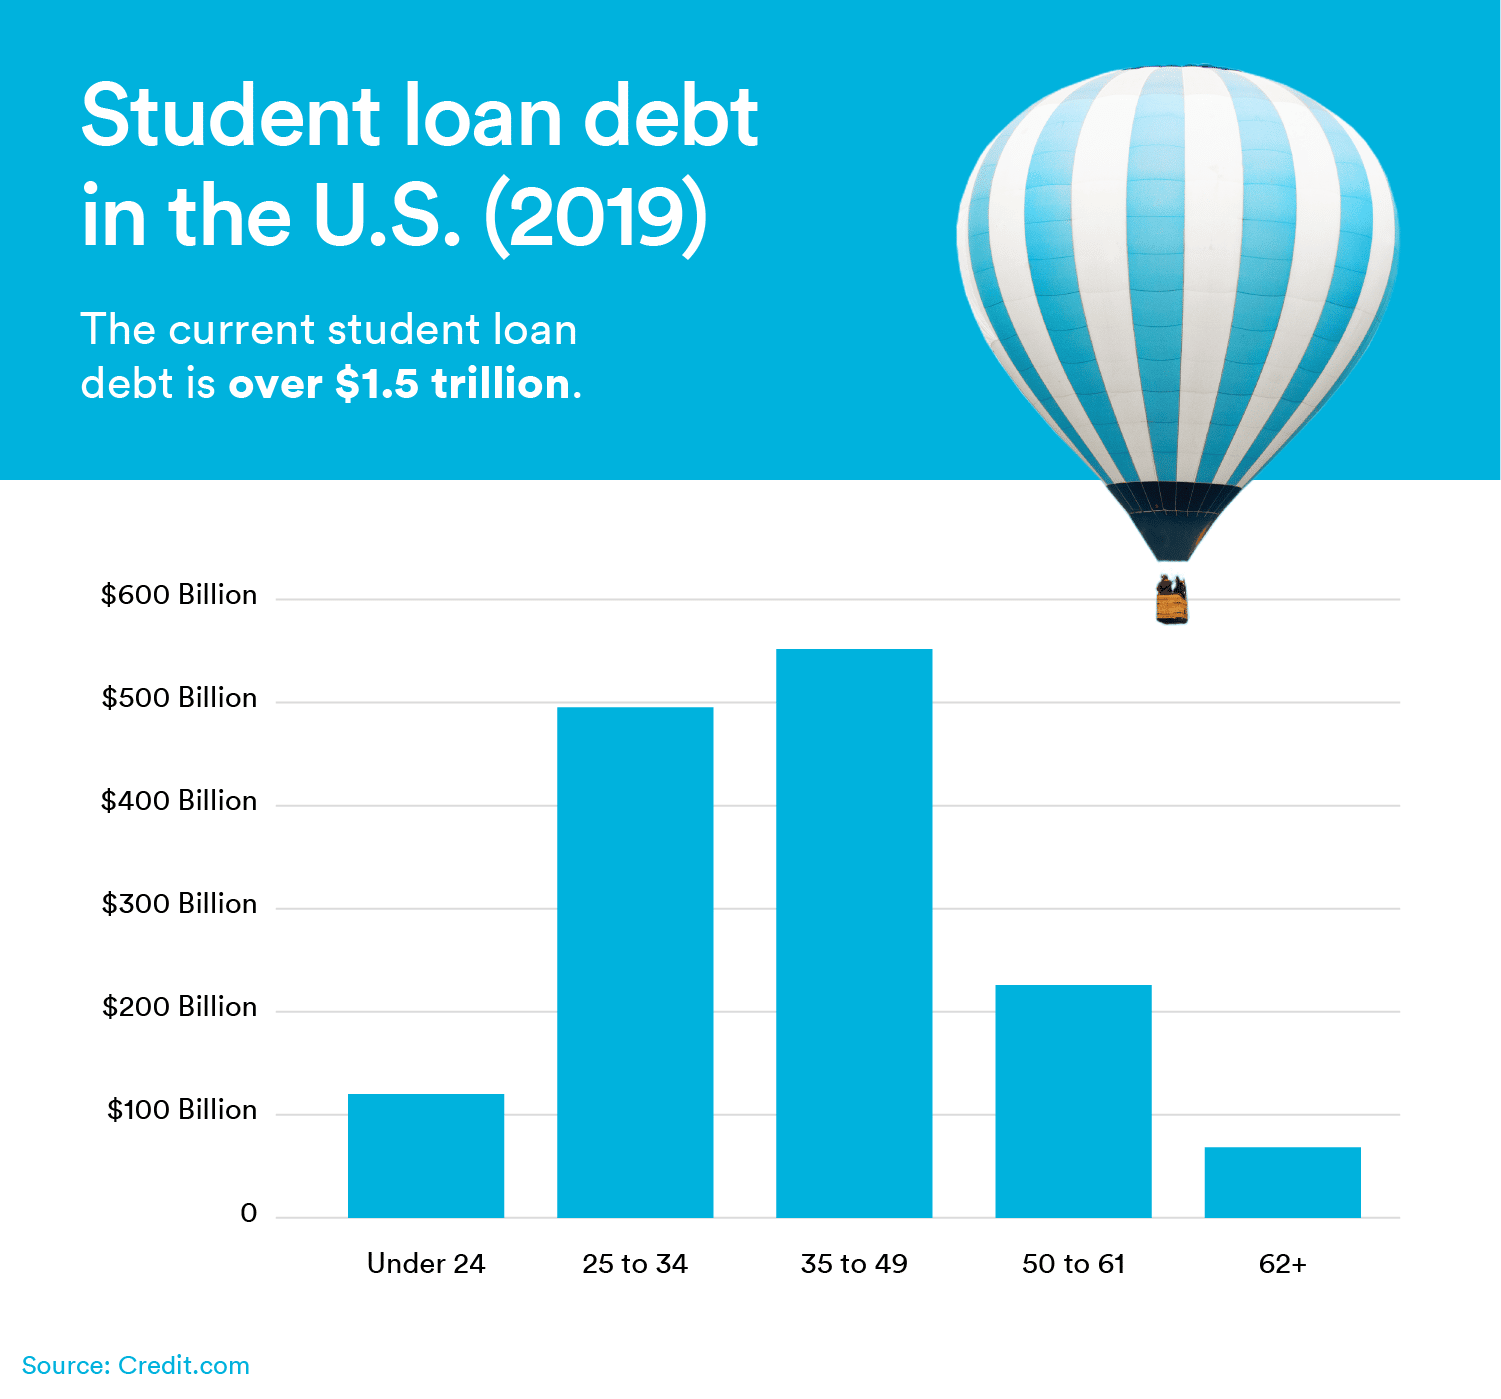 student loan debt in the U.S.